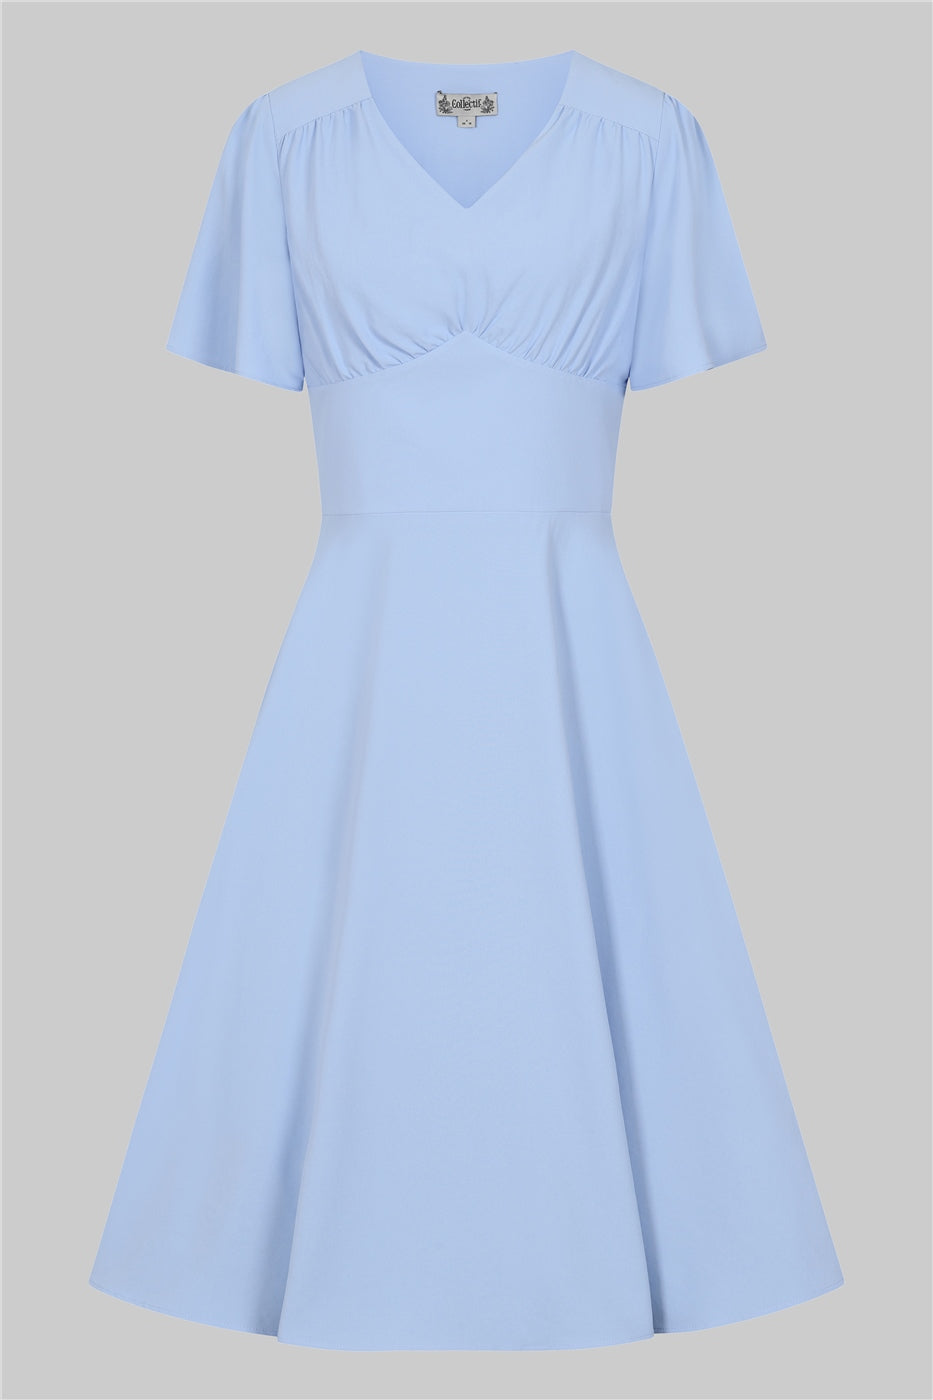 Alex Blue 40s Dress by Collectif